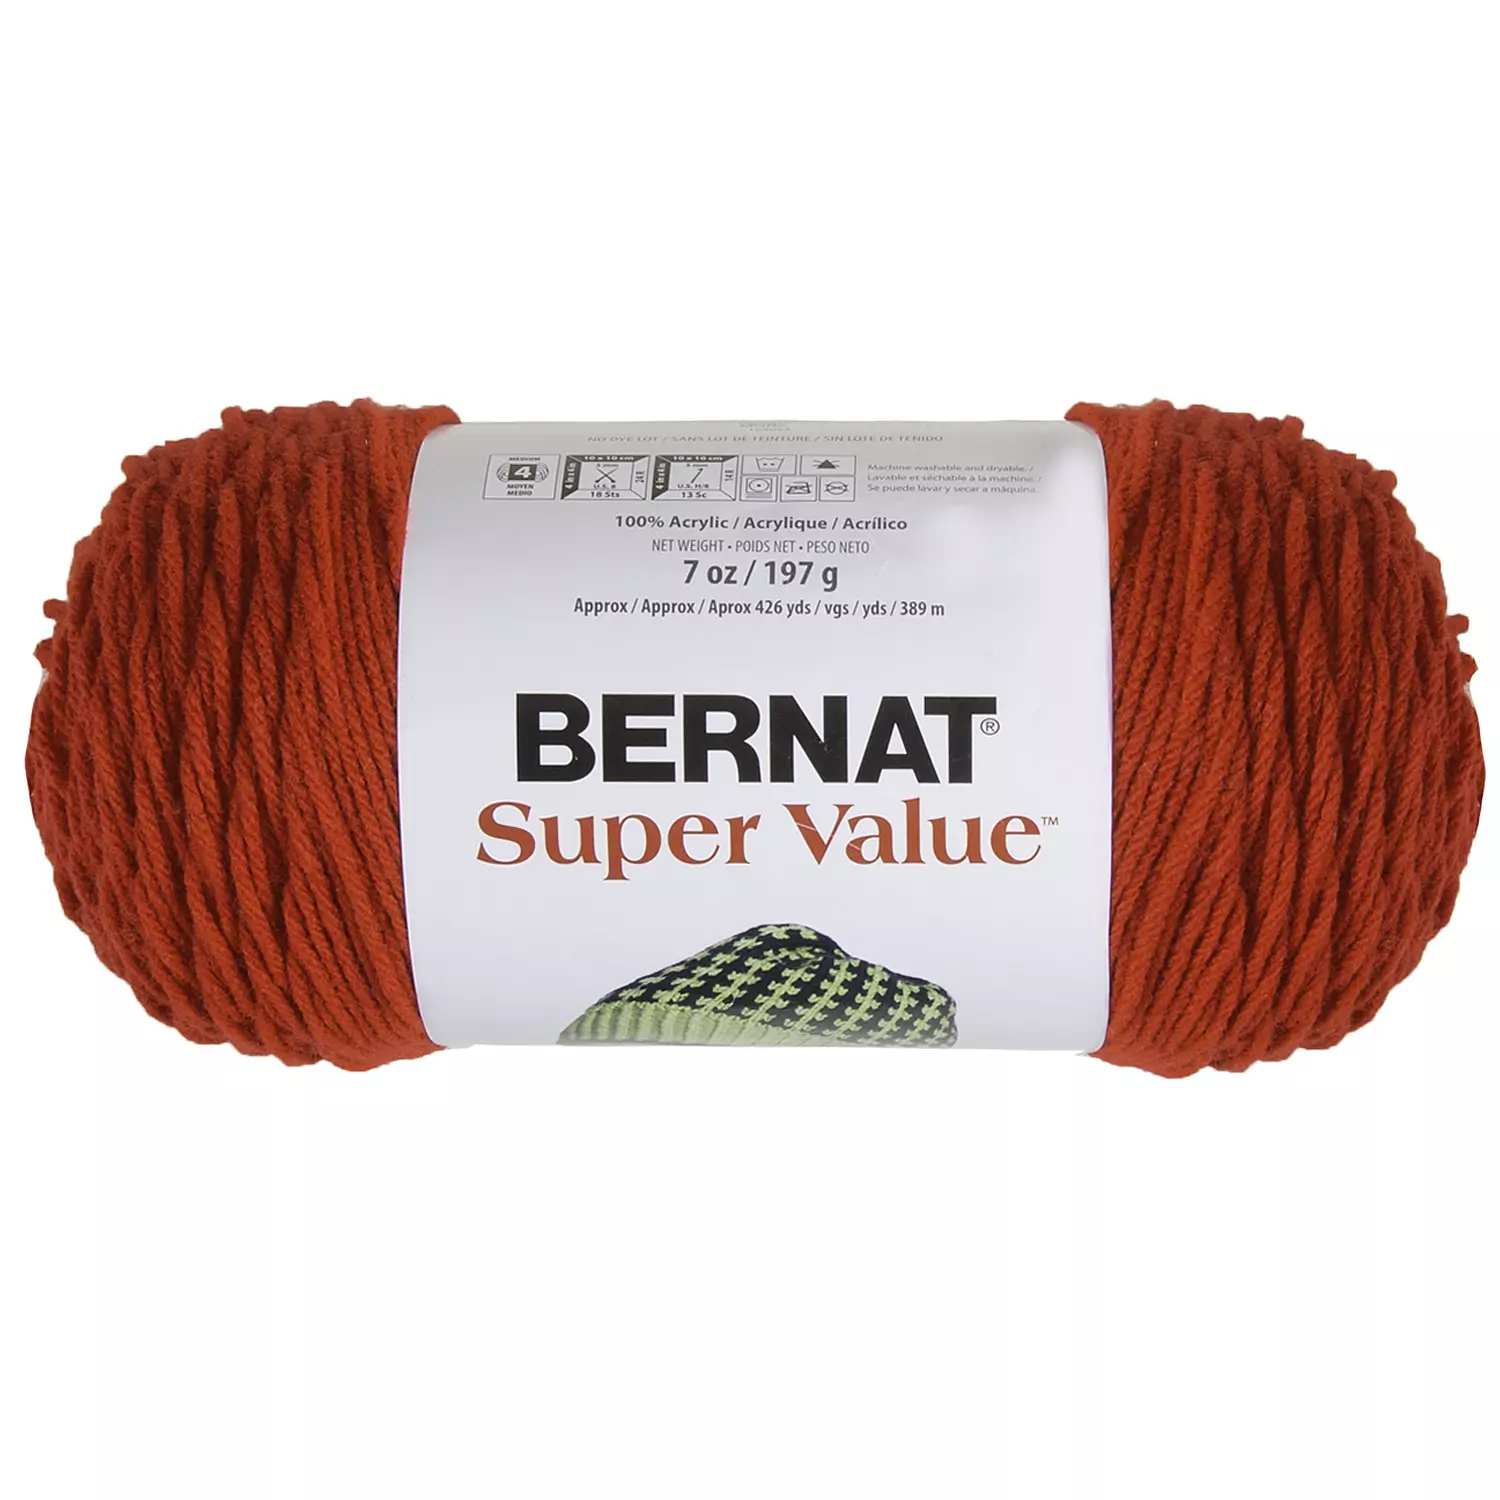 Bernat Super Value - Acrylic yarn, berry. Colour: red